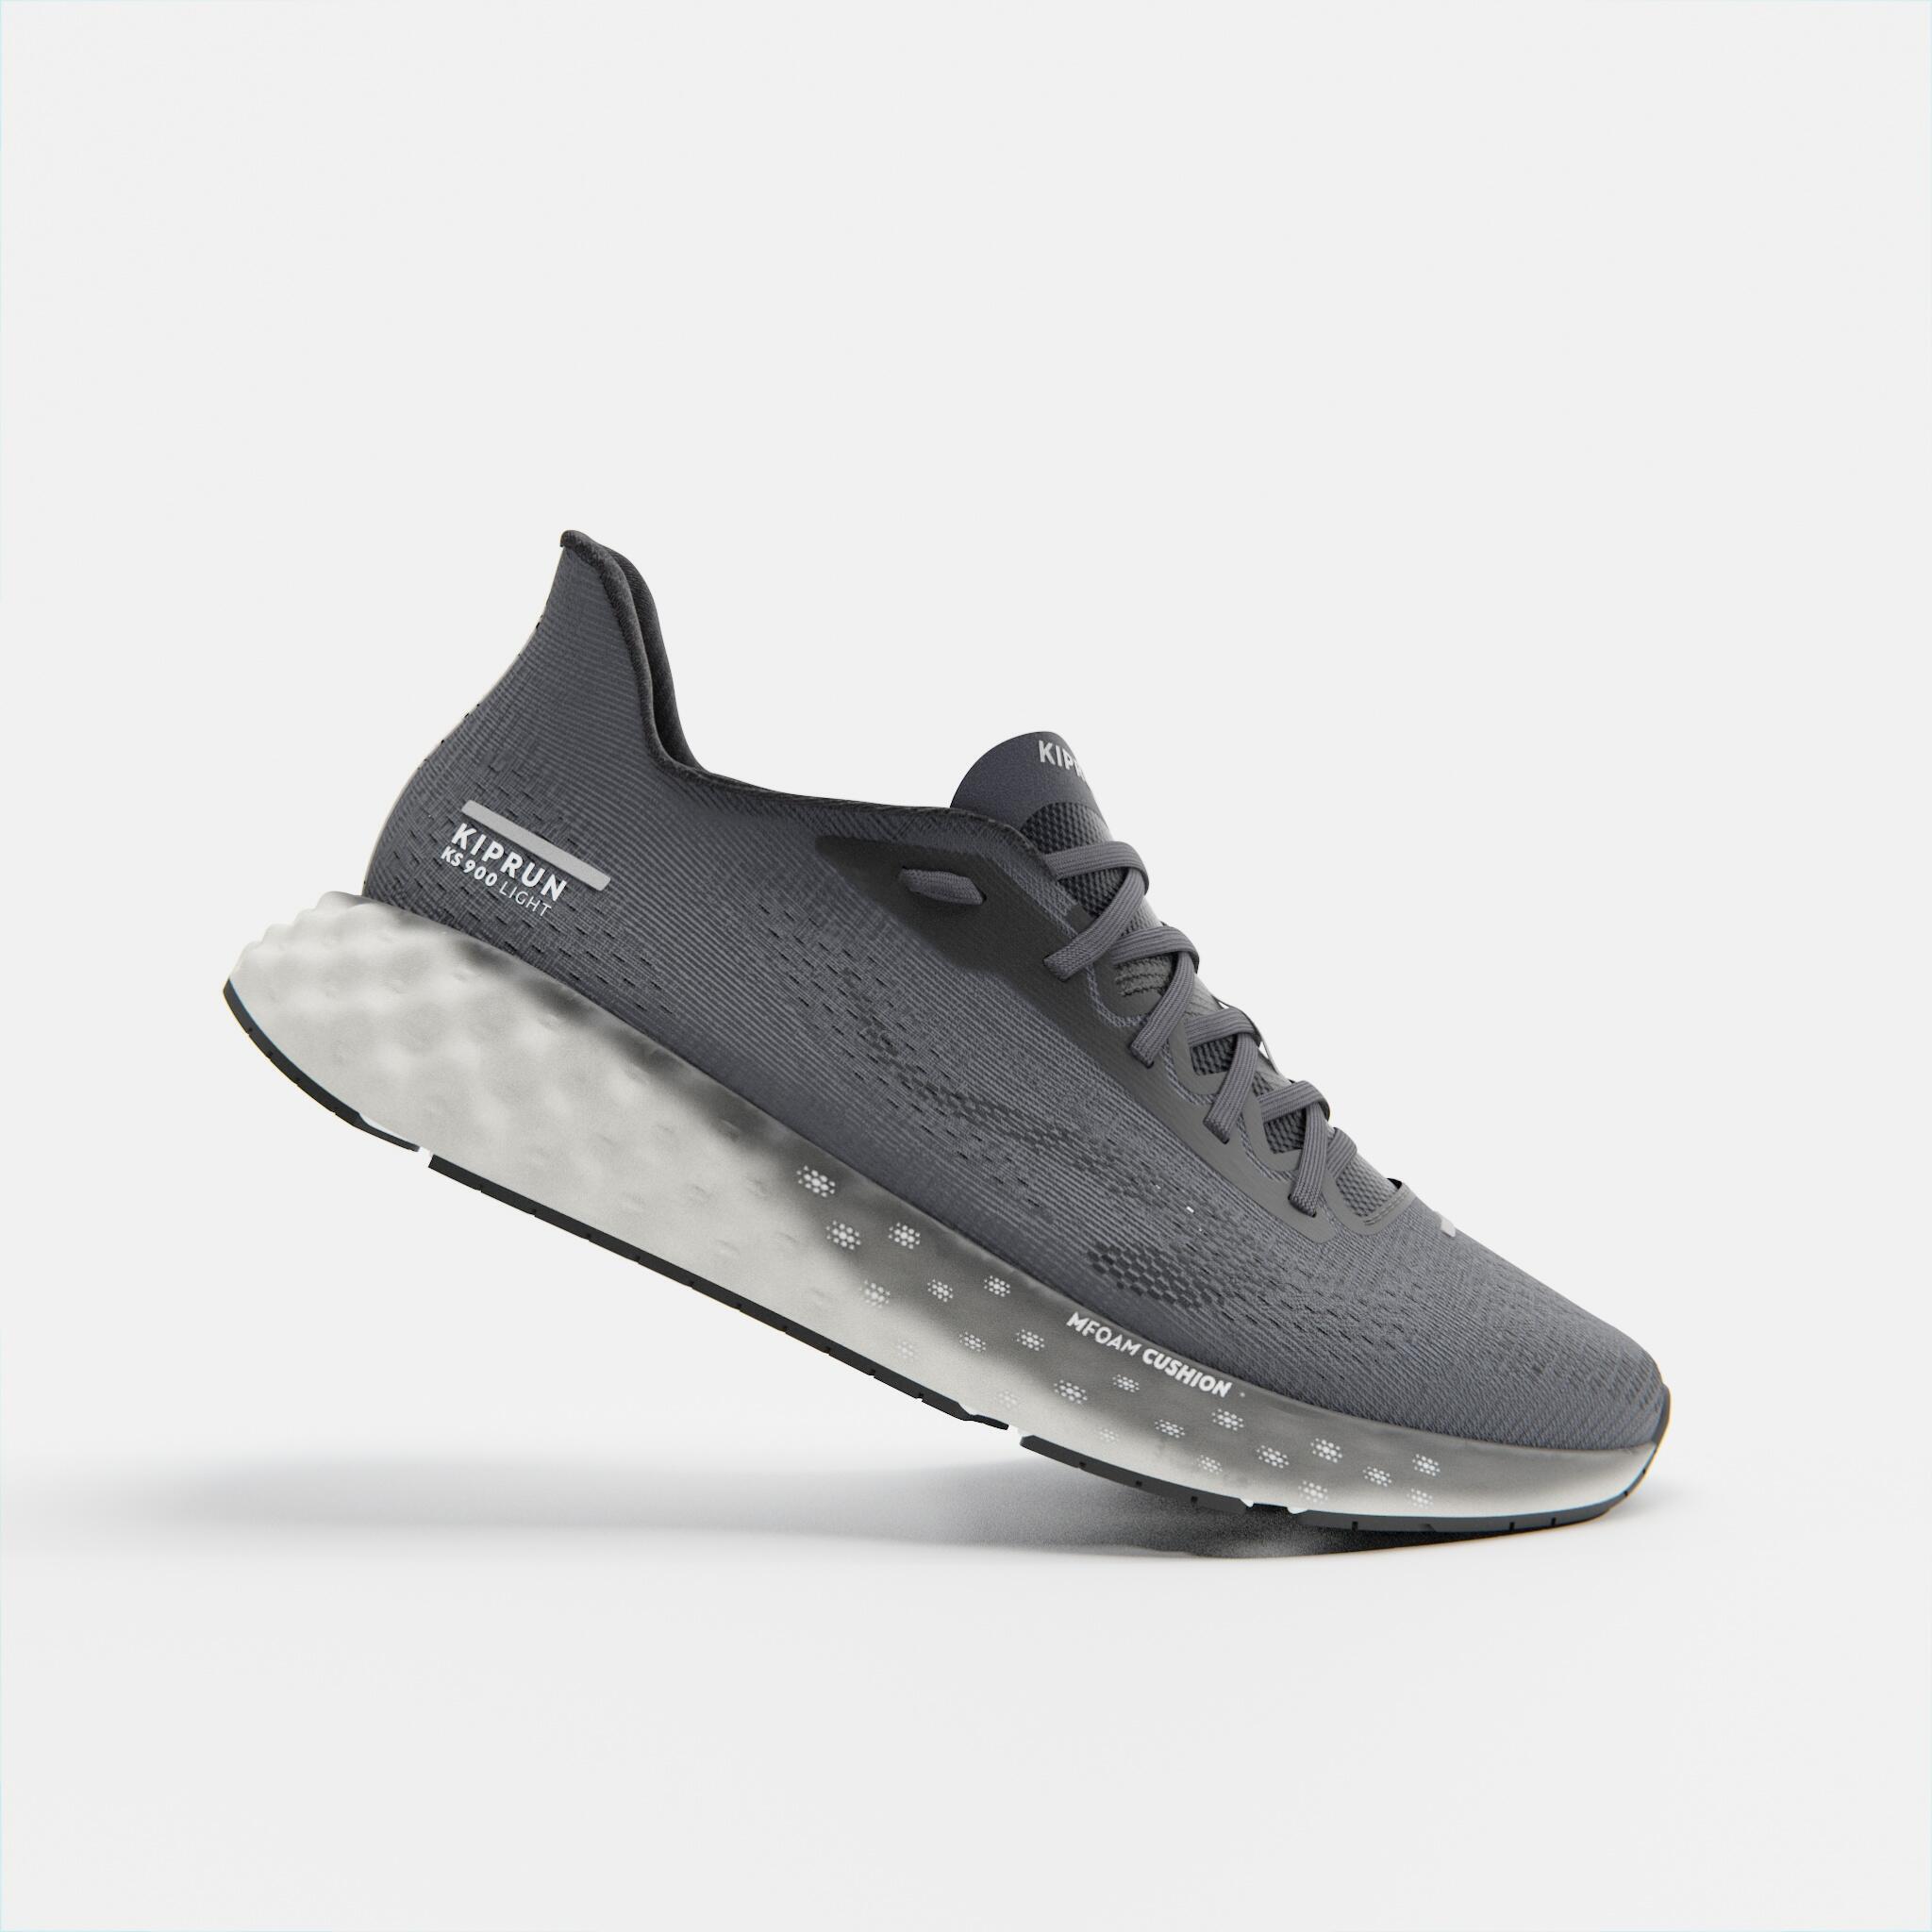 KIPRUN KS900 Light men's running shoes - dark grey 1/13